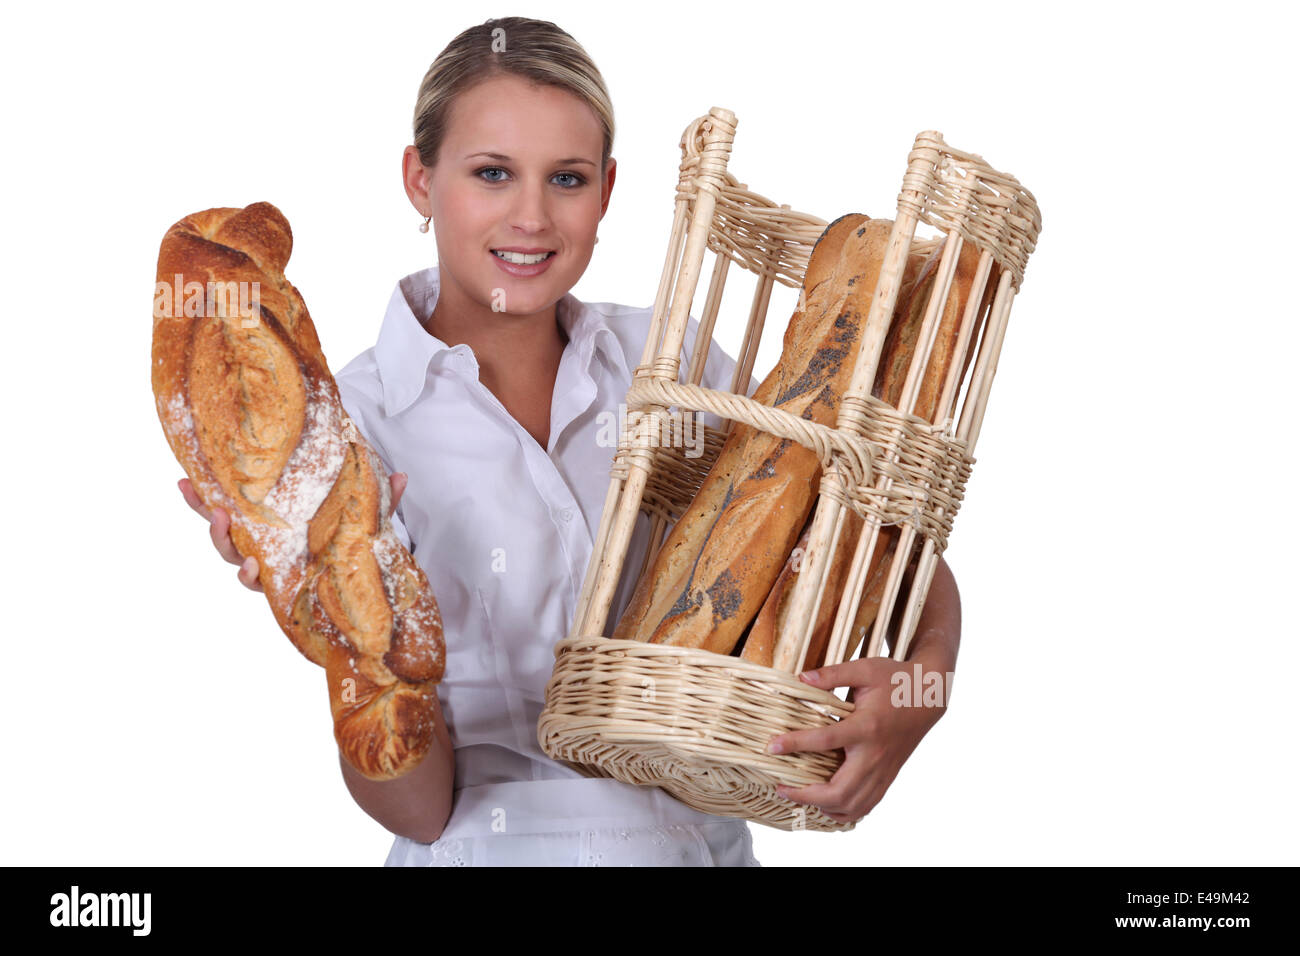 Woman baker self-employed on white background Stock Photo